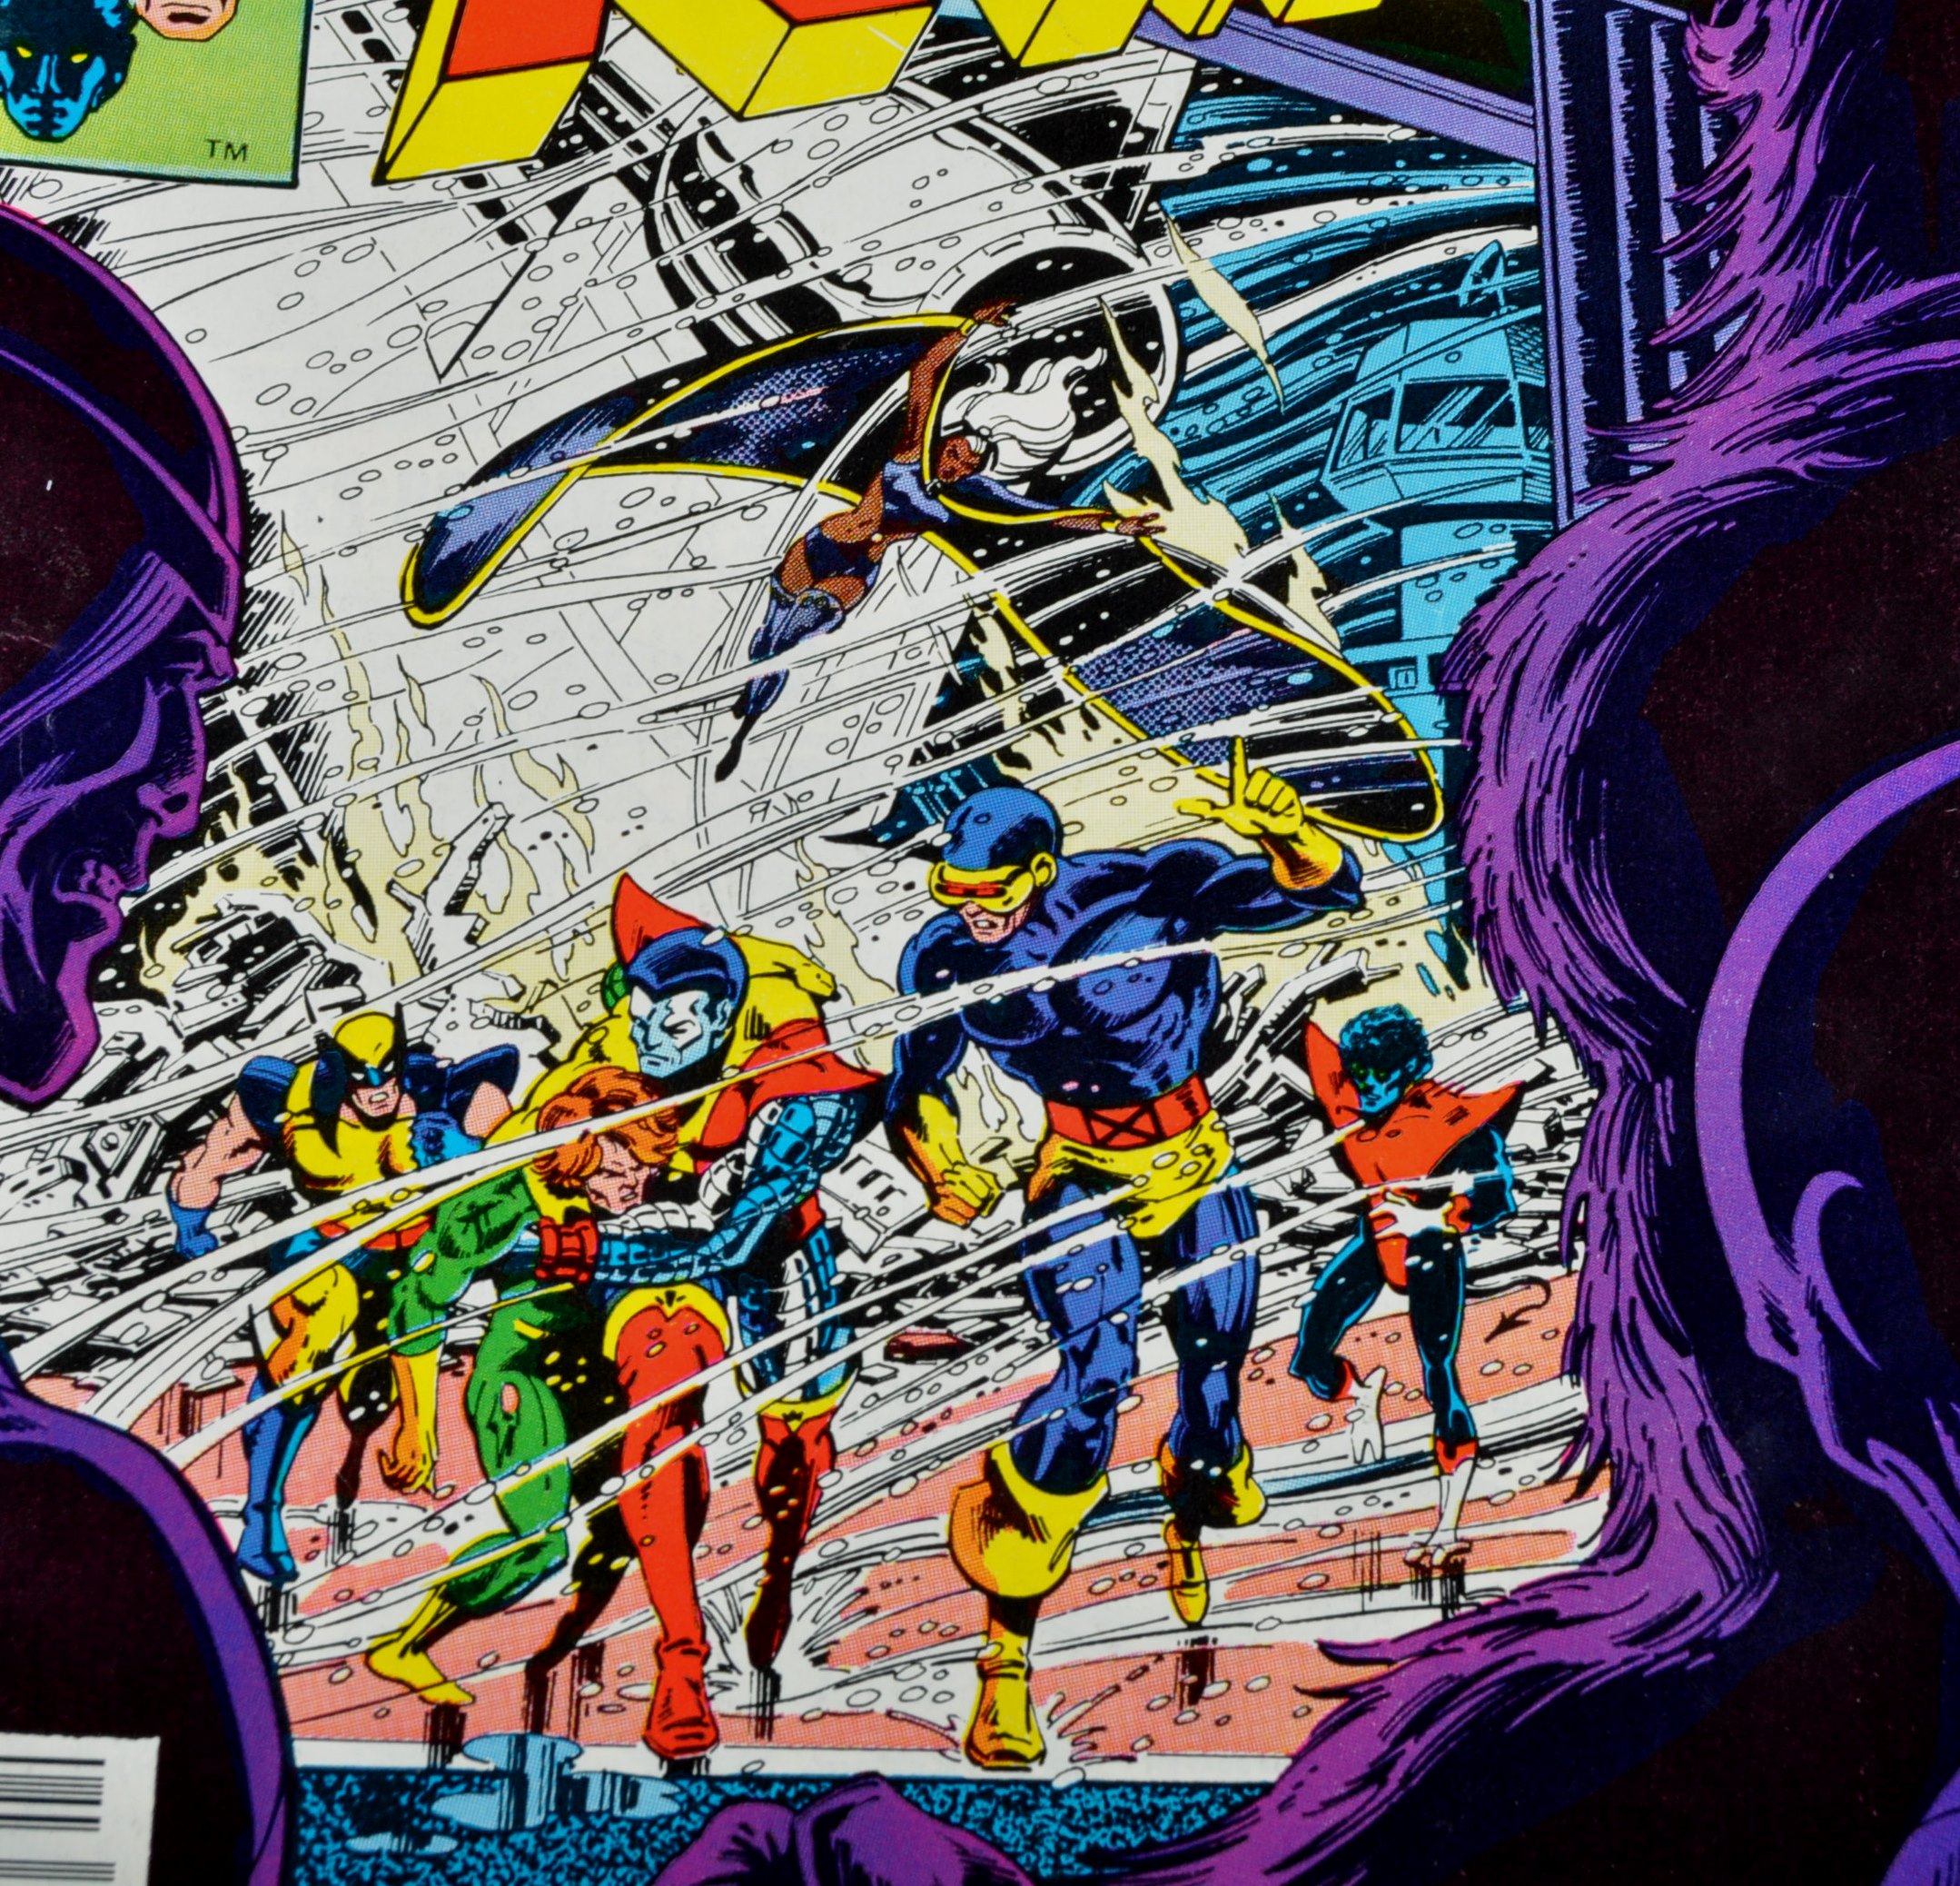 MARVEL COMICS - THE UNCANNY X-MEN - ISSUE #20 - 1ST APP. ALPHA FLIGHT - Image 2 of 5